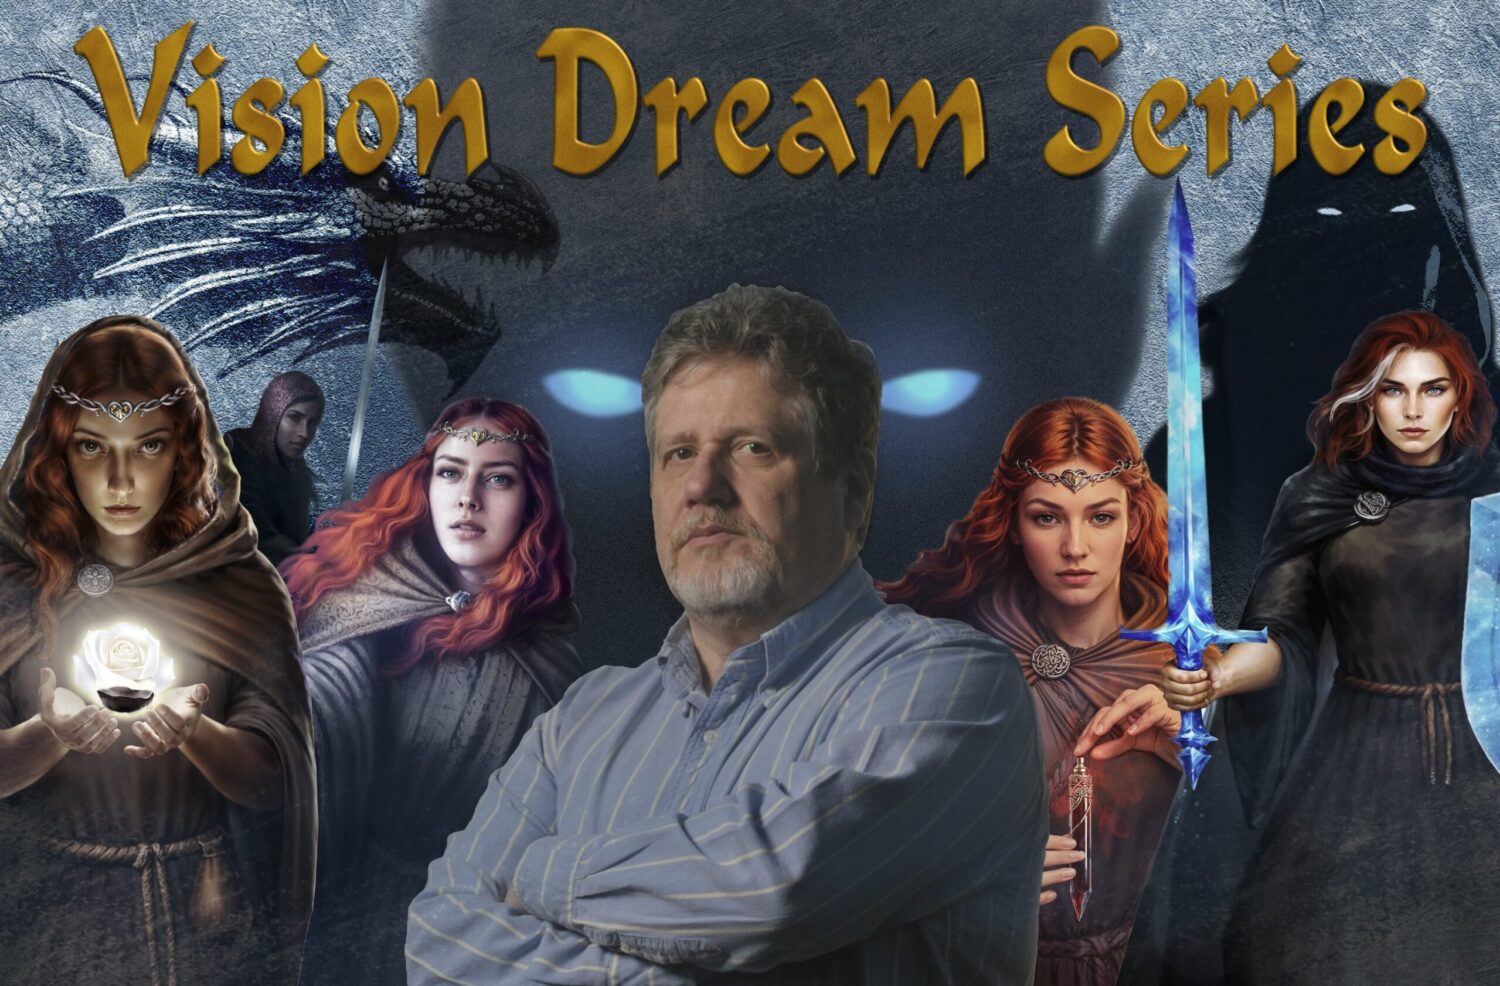 Vision Dream Series by Robert Clifton Storey Jr